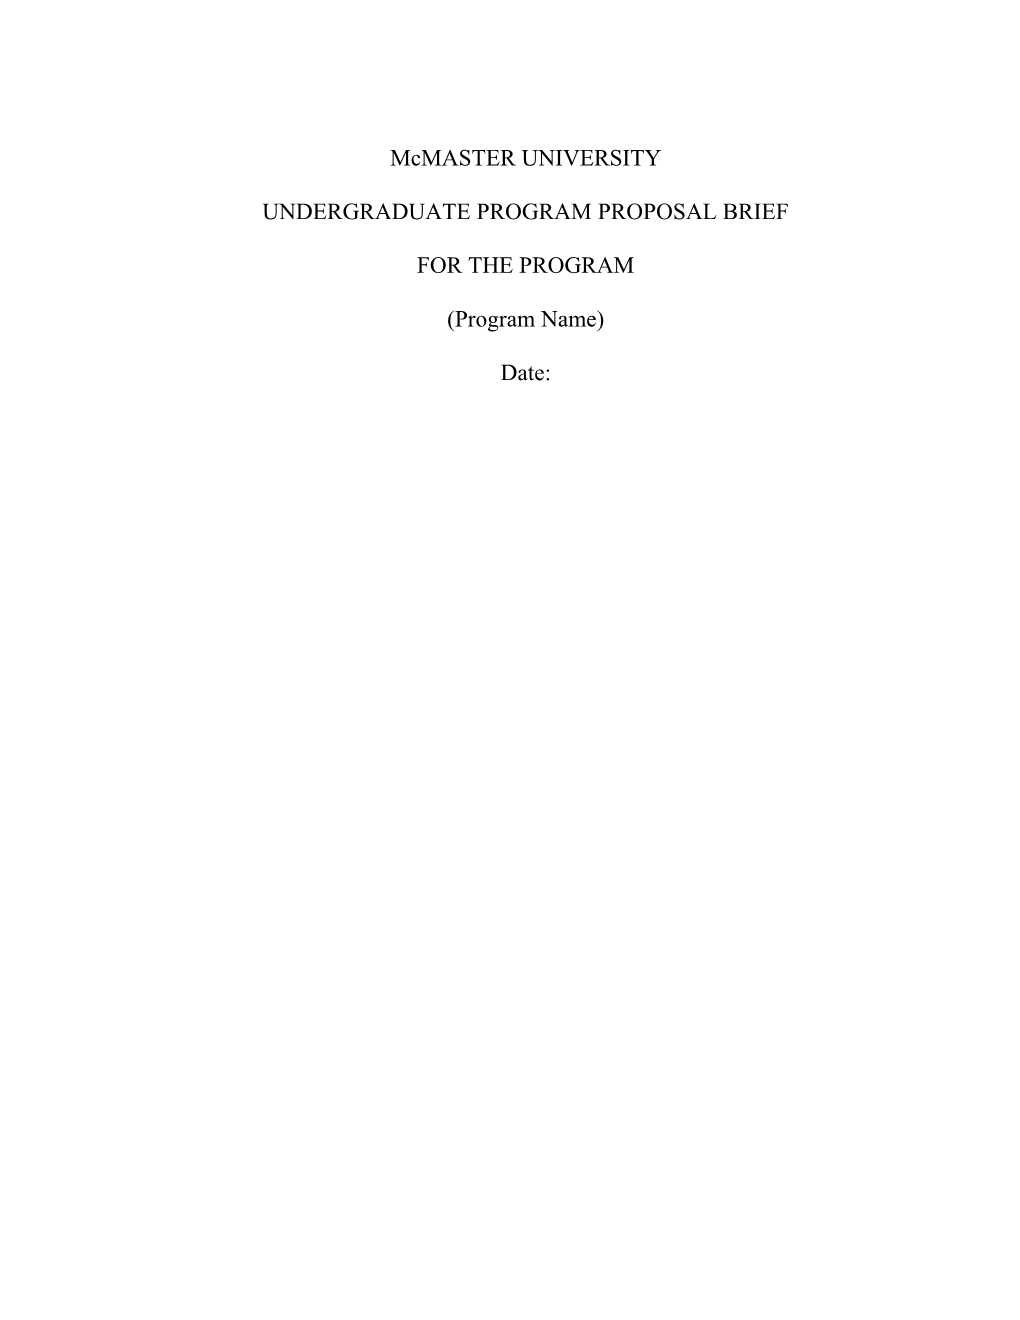 Undergraduate Program Proposal Brief